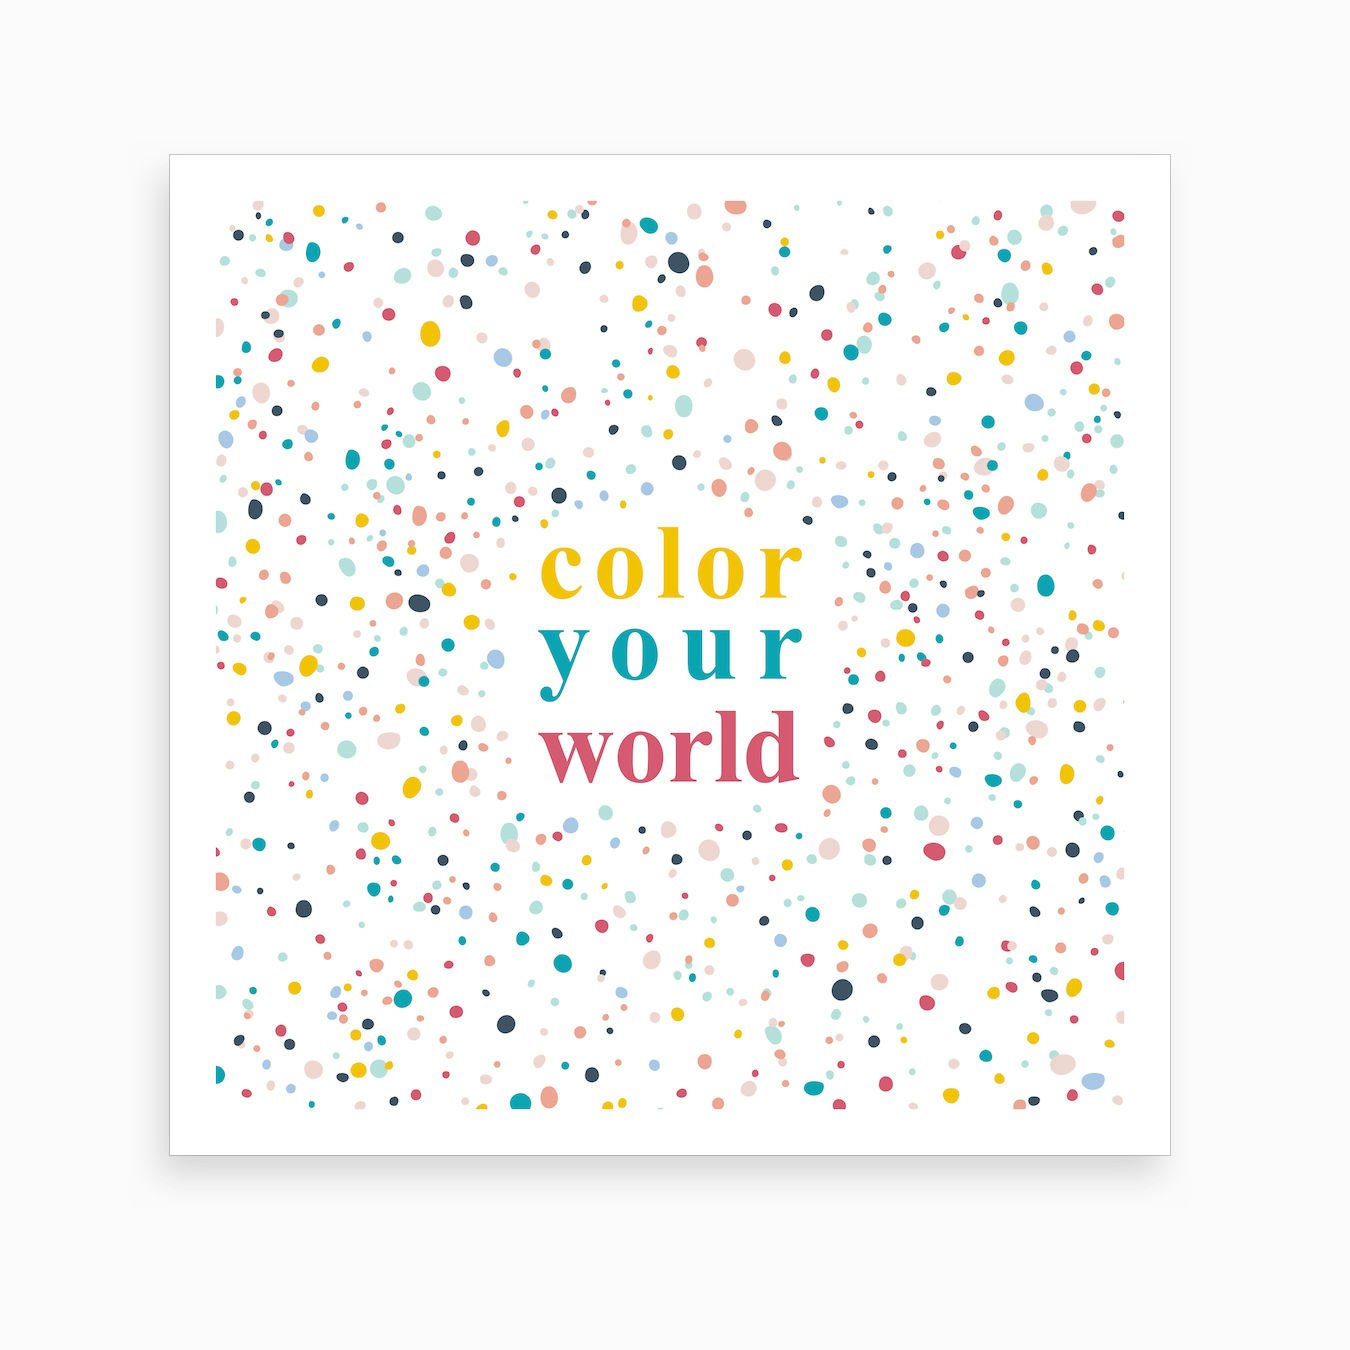 Colour your World!